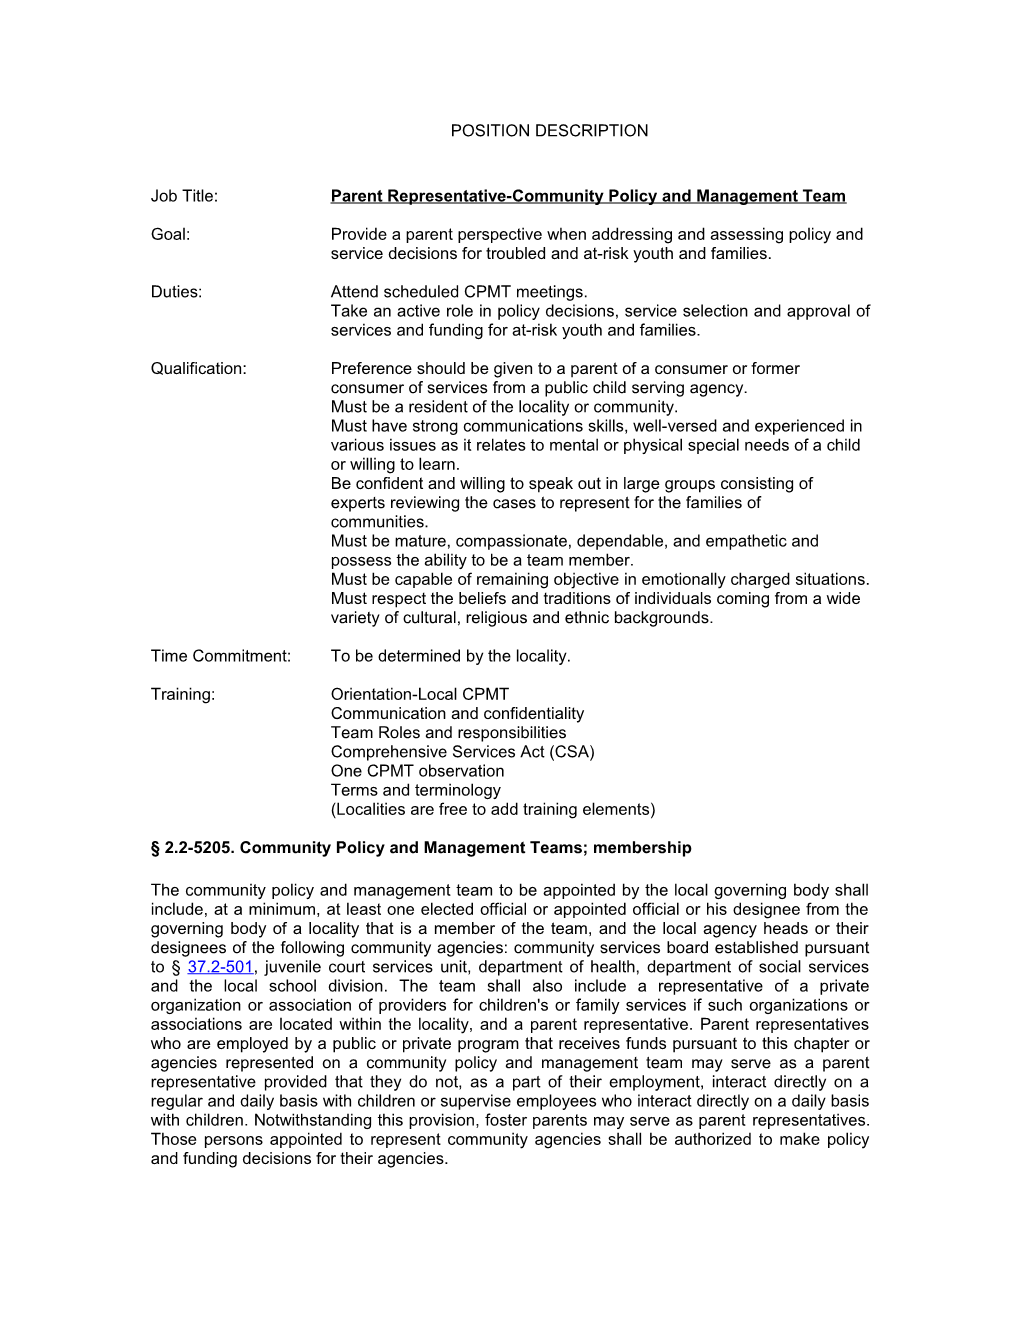 Job Title: Parent Representative-Community Policy and Management Team